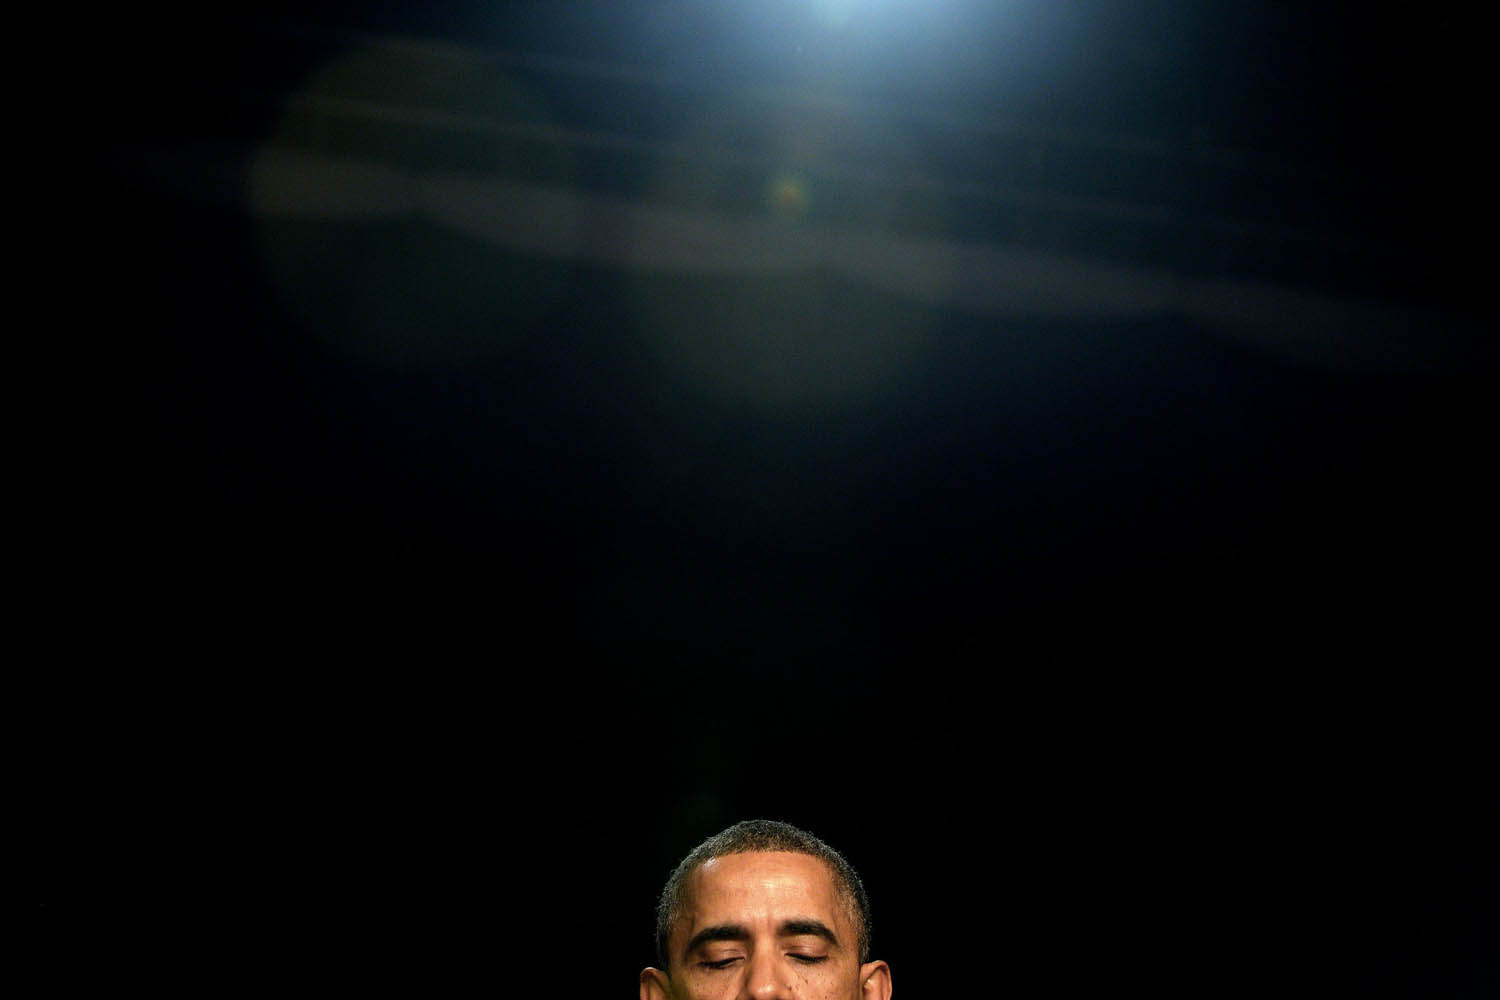 President Obama attends the National Prayer Breakfast - DC